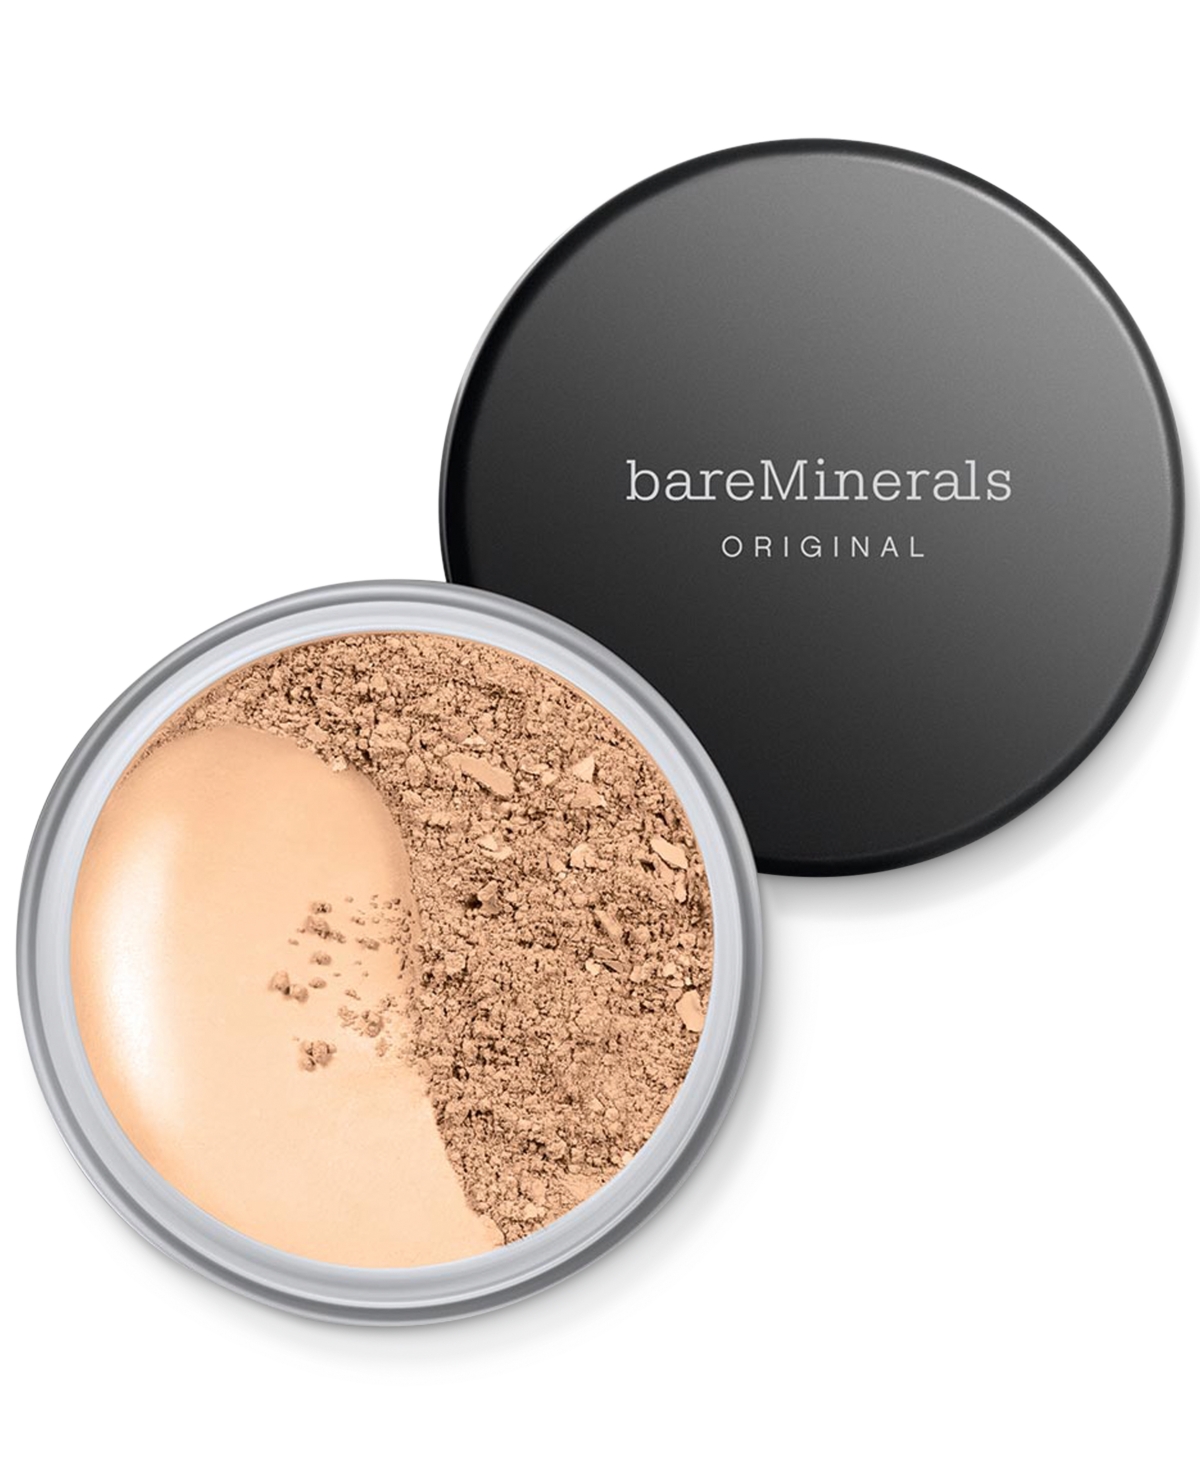 Bareminerals Original Loose Powder Foundation Spf 15 In Fairly Light  - For Fair Skin With Neutr